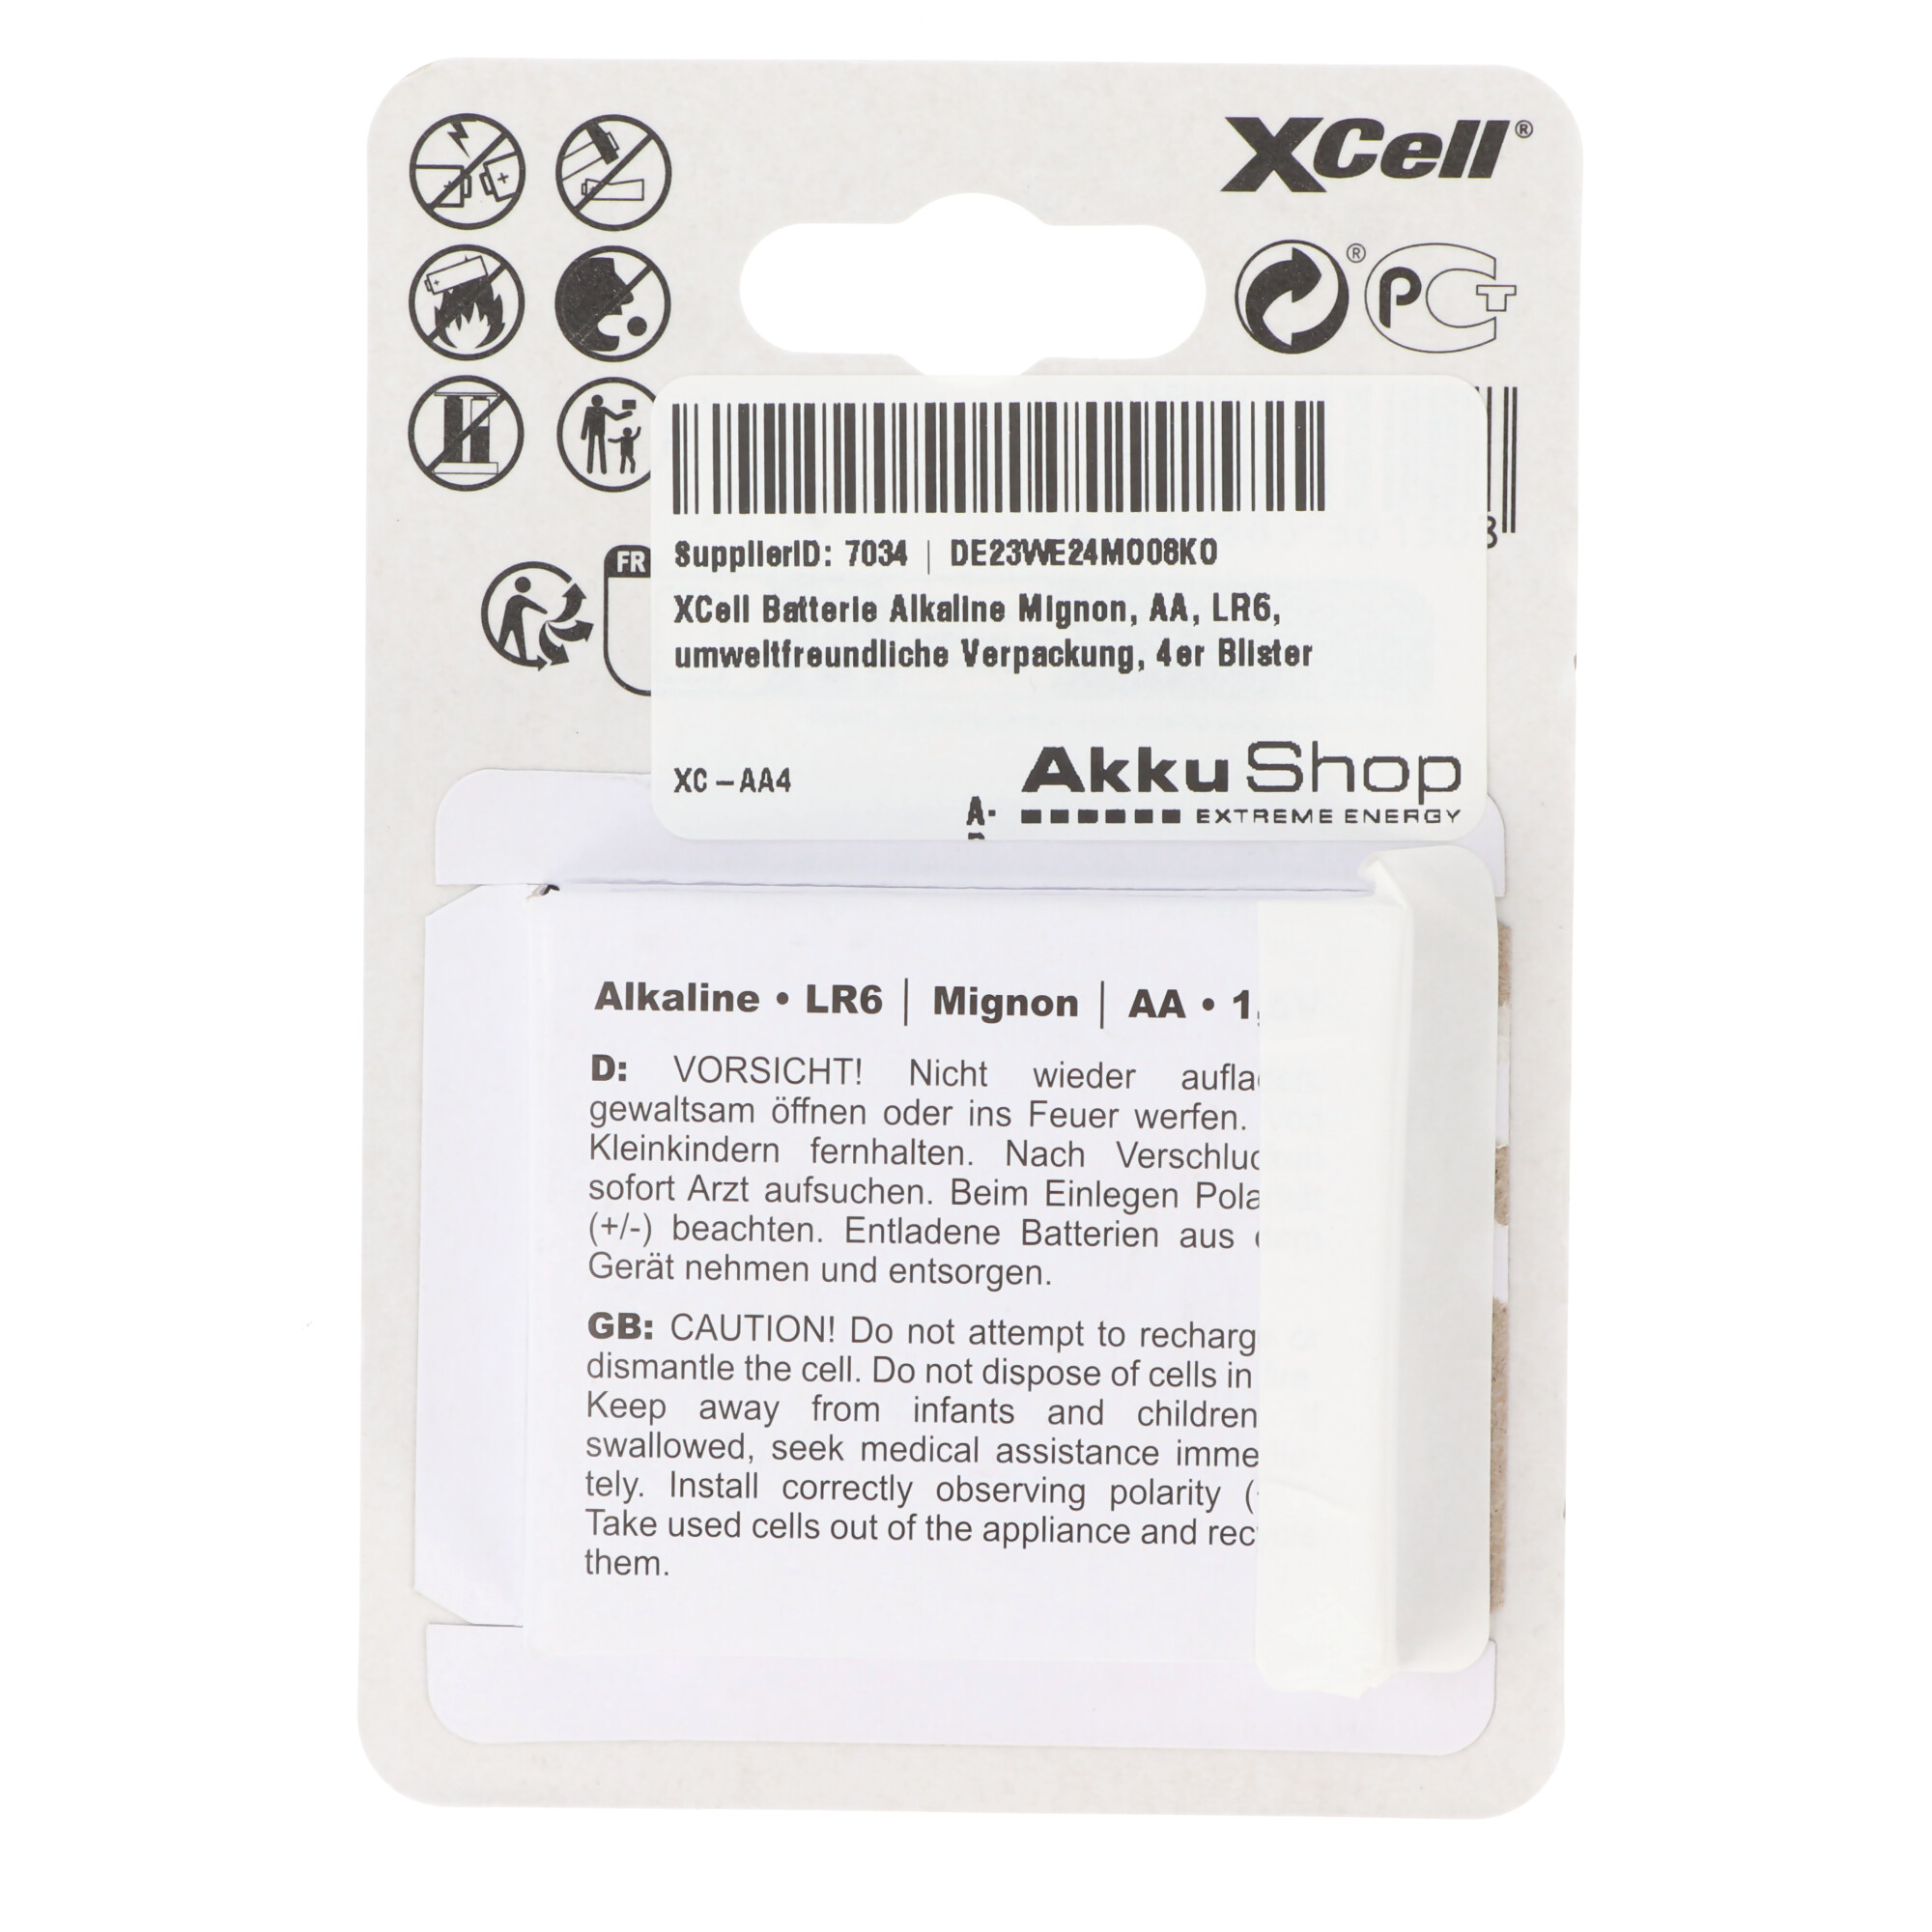 XCell Batterie Alkaline Mignon, AA, LR6, umweltfreundliche Verpackung, 4er Blister